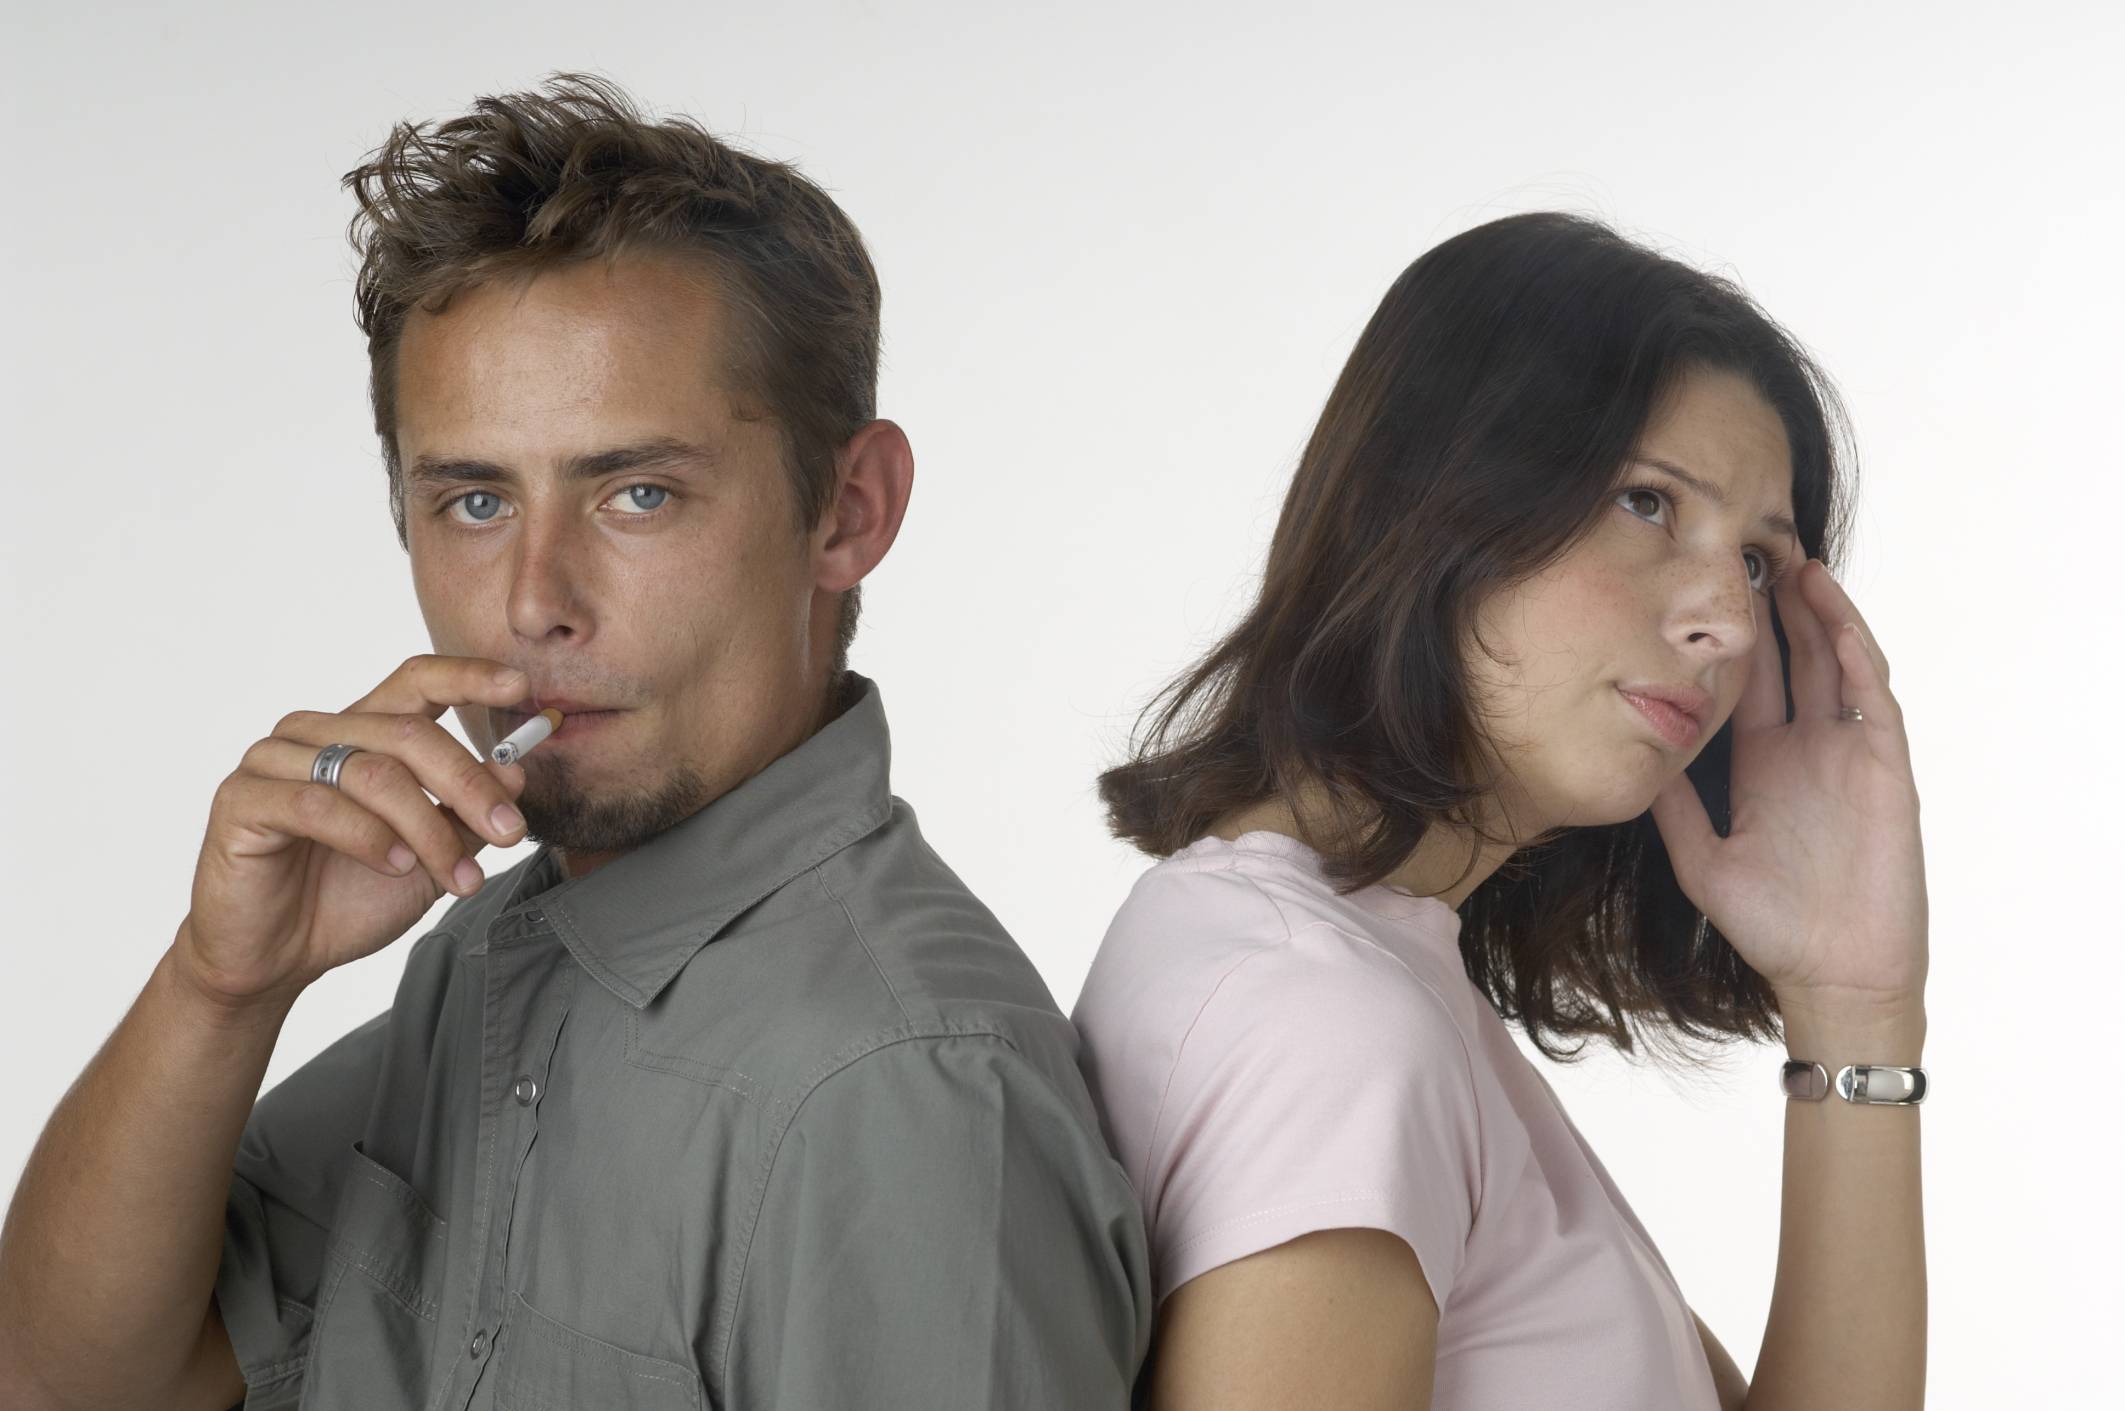 Что мужчина думает о женском курении? | мужчина и женщина | школажизни.ру